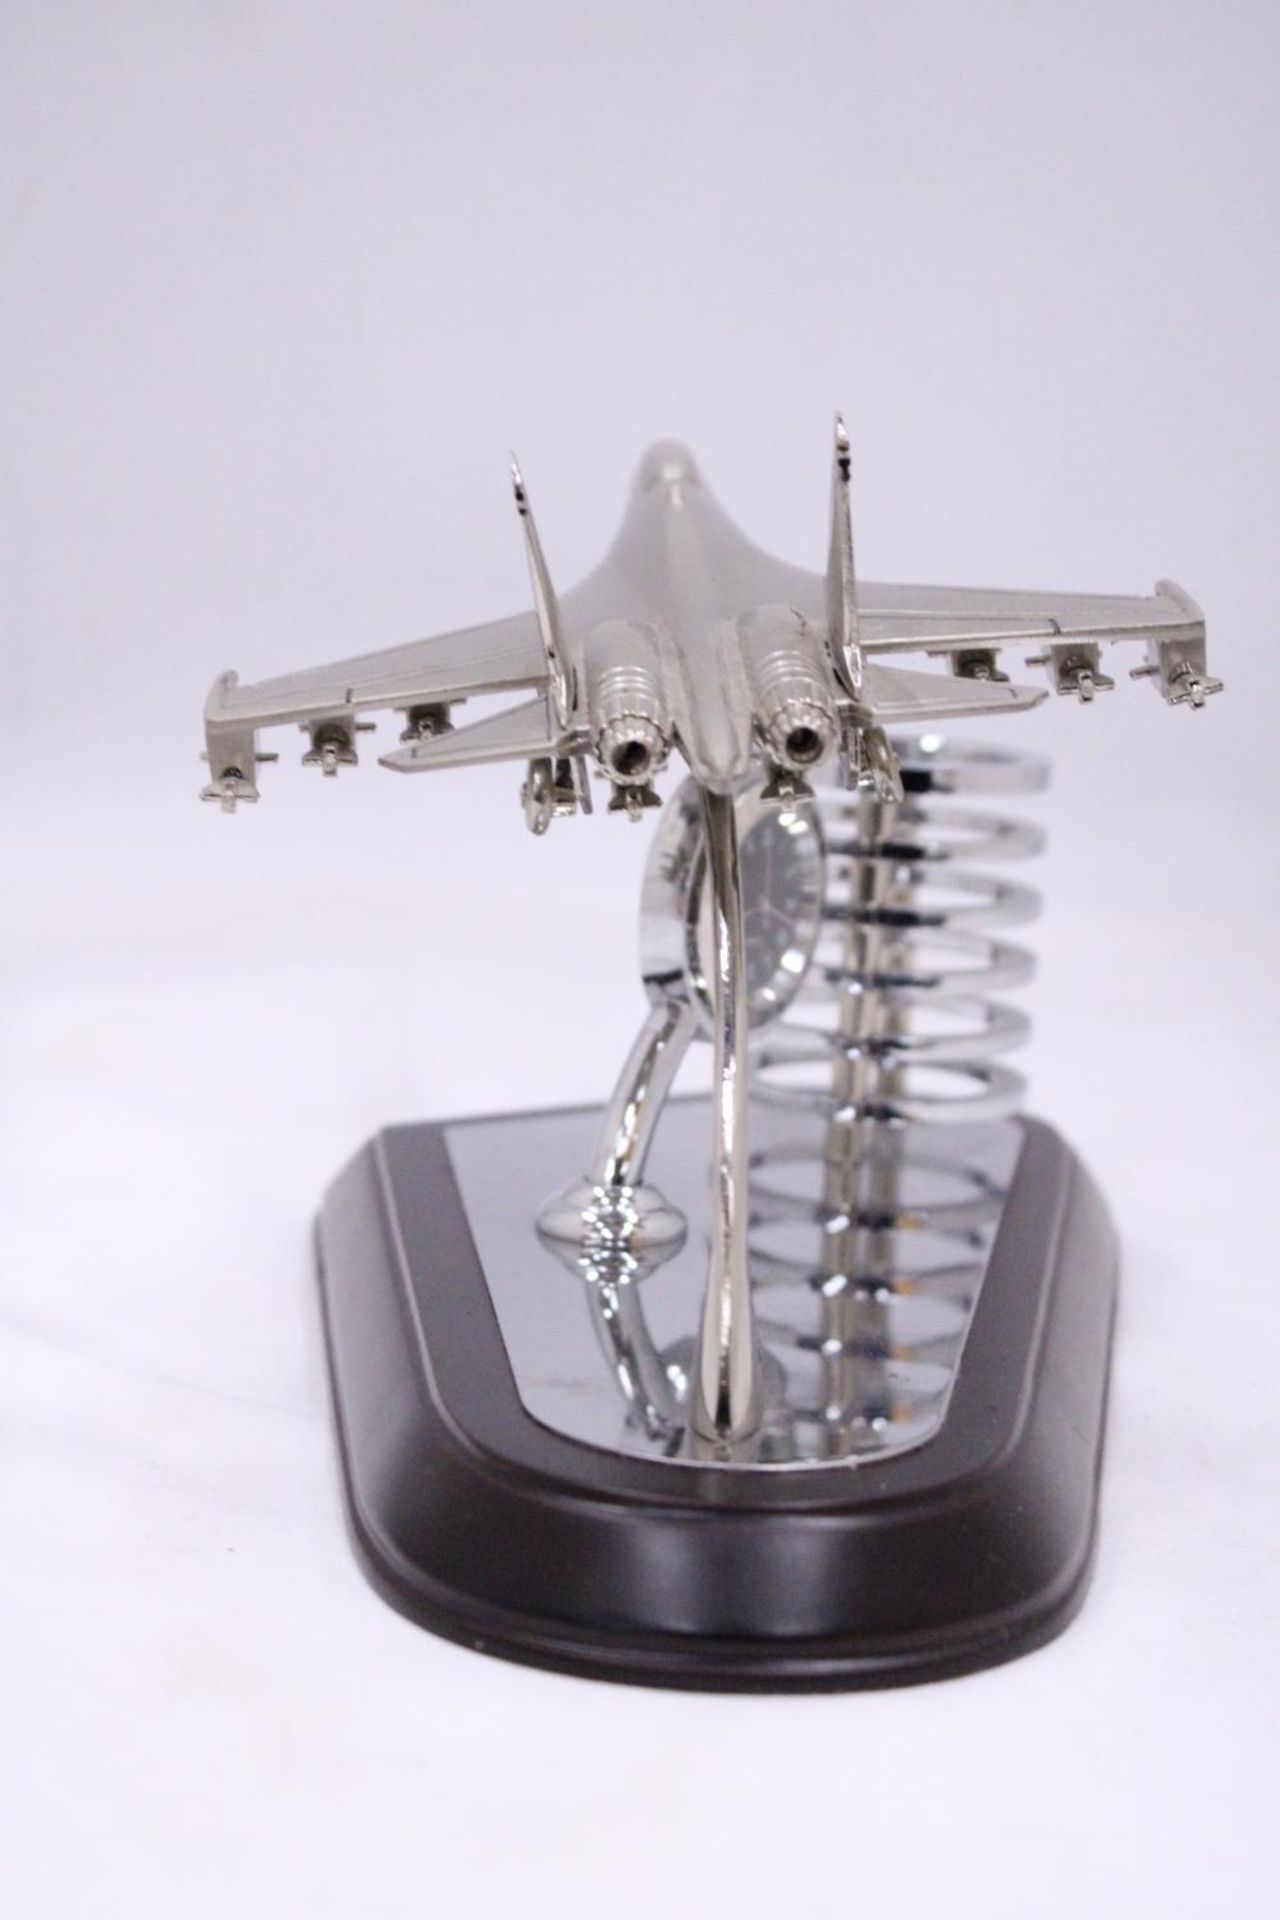 AN F15 DESKTOP MODEL AIRCRAFT PLANE, CLOCK AND PEN HOLDER - Image 5 of 6